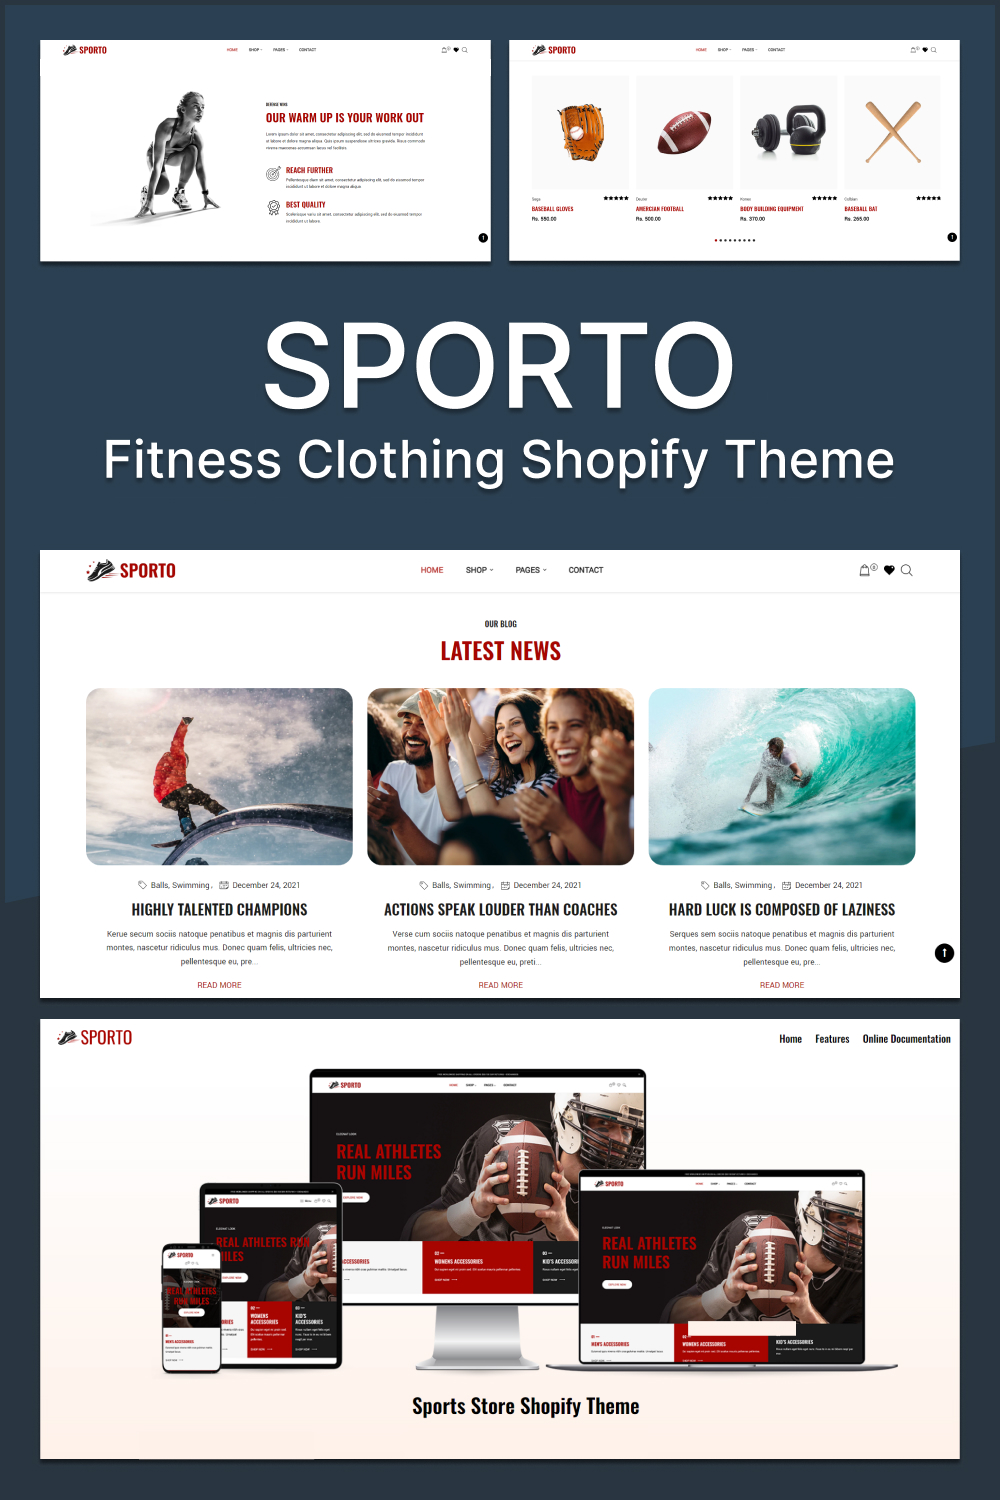 Sporto - Fitness Clothing Shopify Theme - Pinterest.